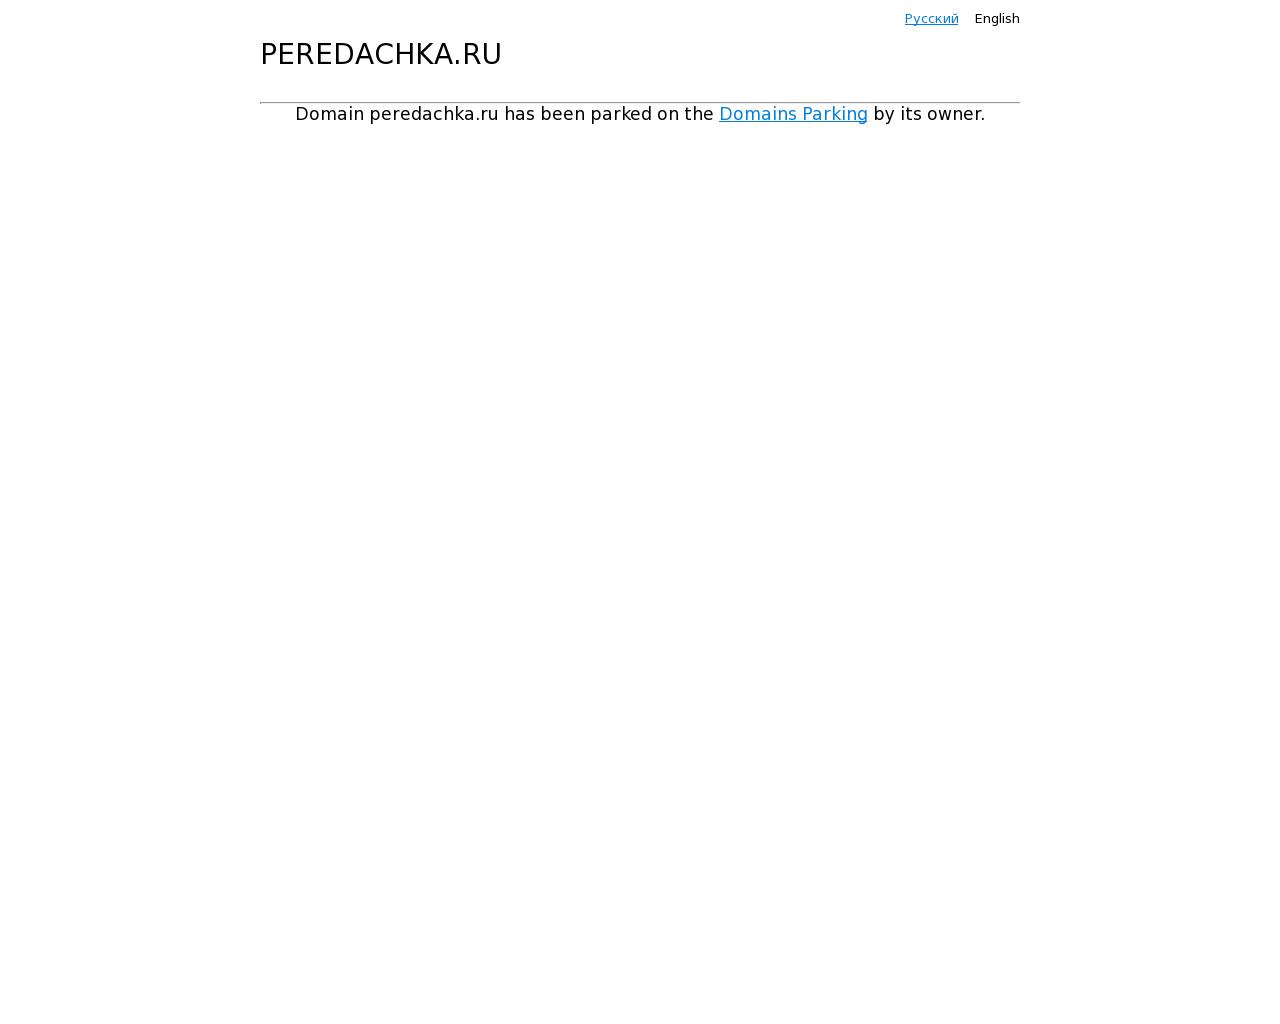 Изображение сайта peredachka.ru в разрешении 1280x1024